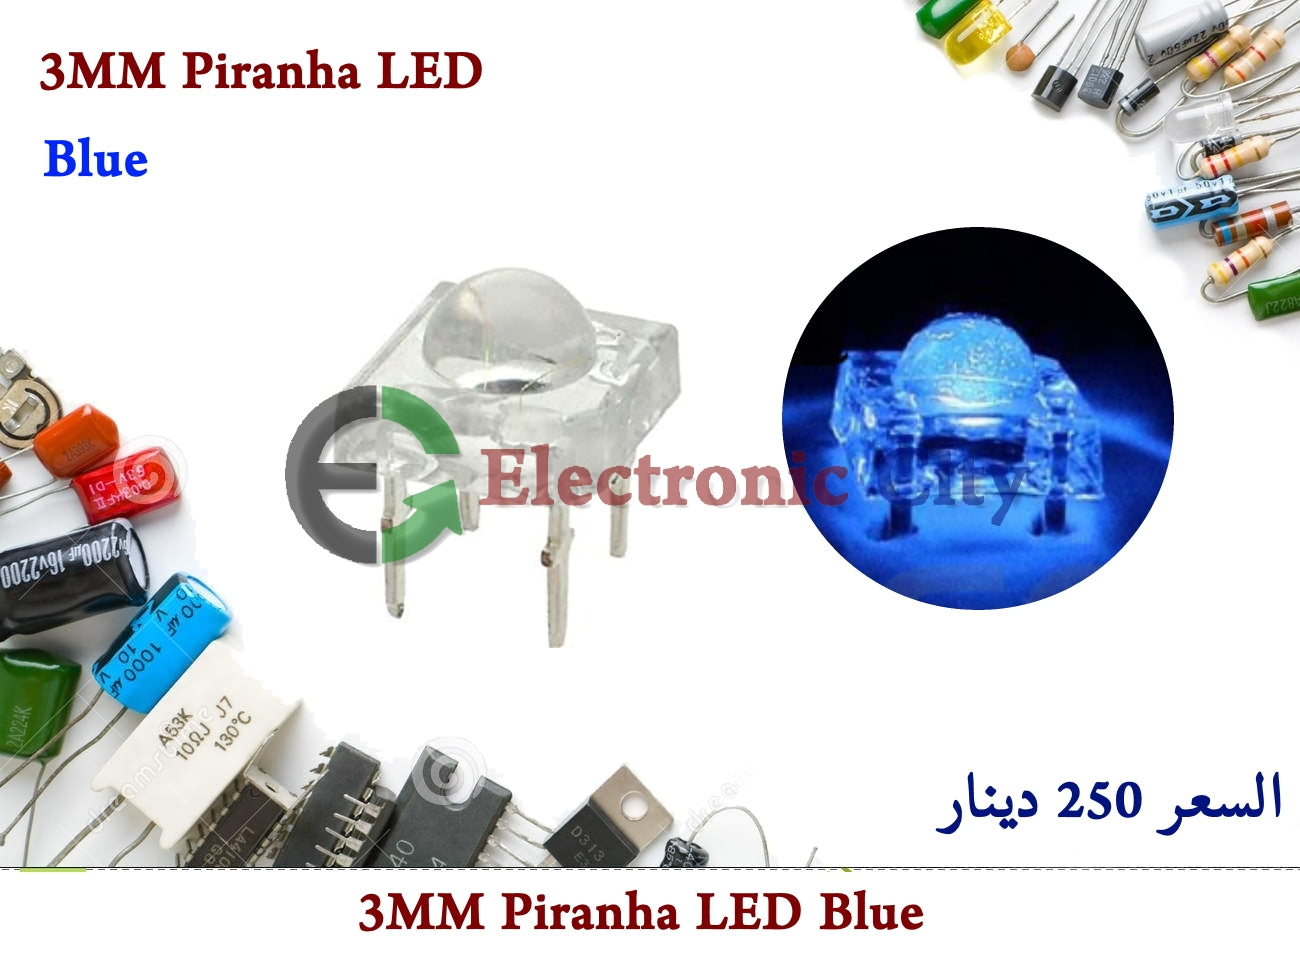 3MM Piranha LED Blue